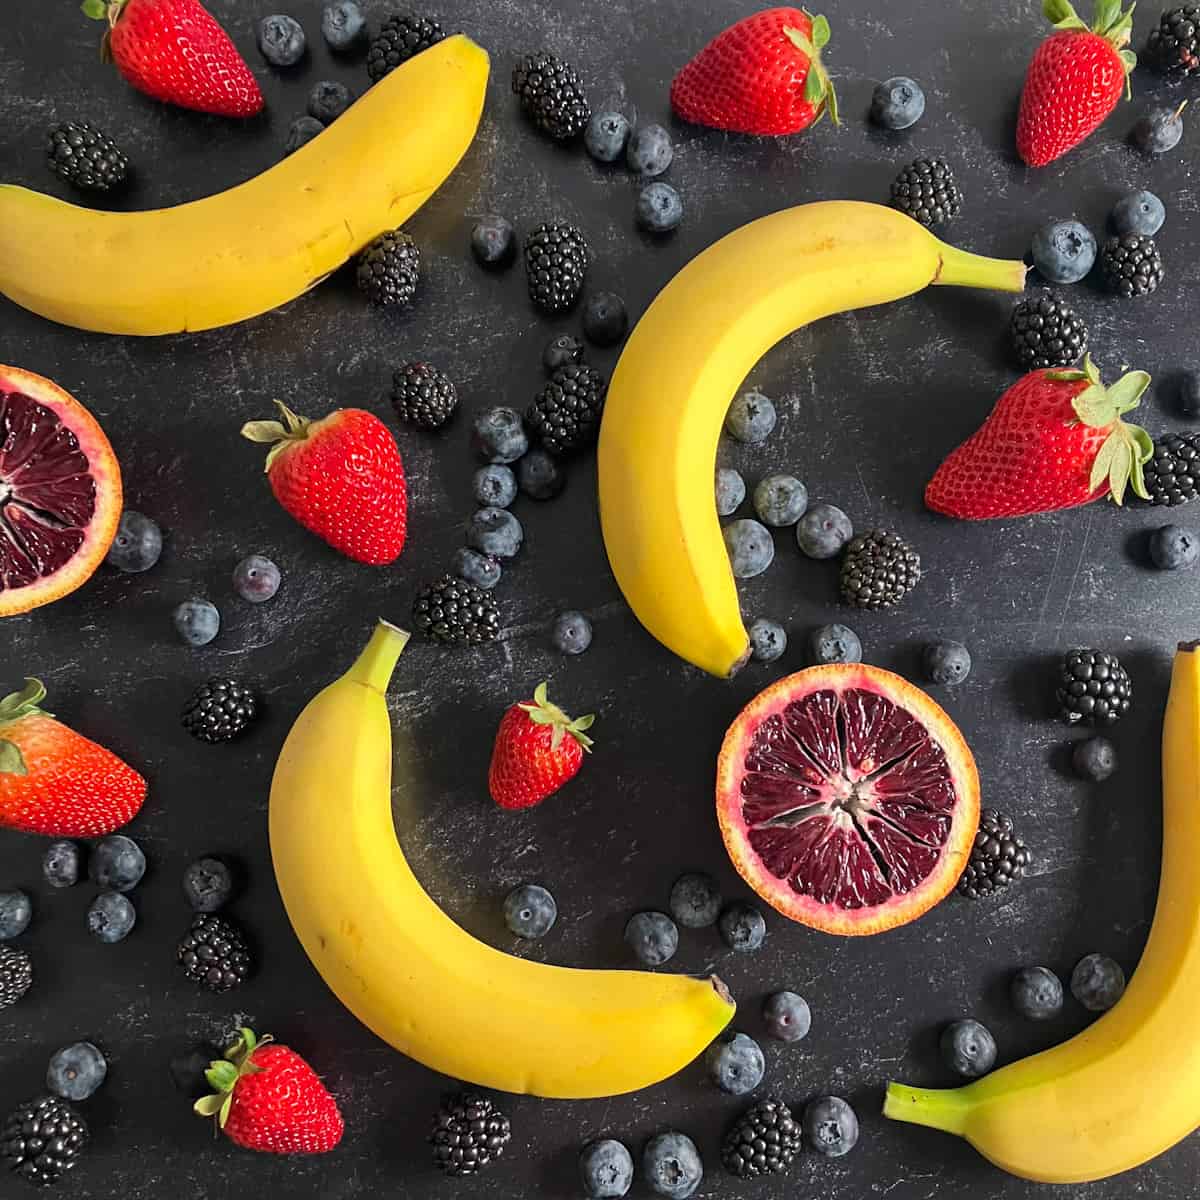 should i eat diamond fruit or stay dark fruit : r/bloxfruits